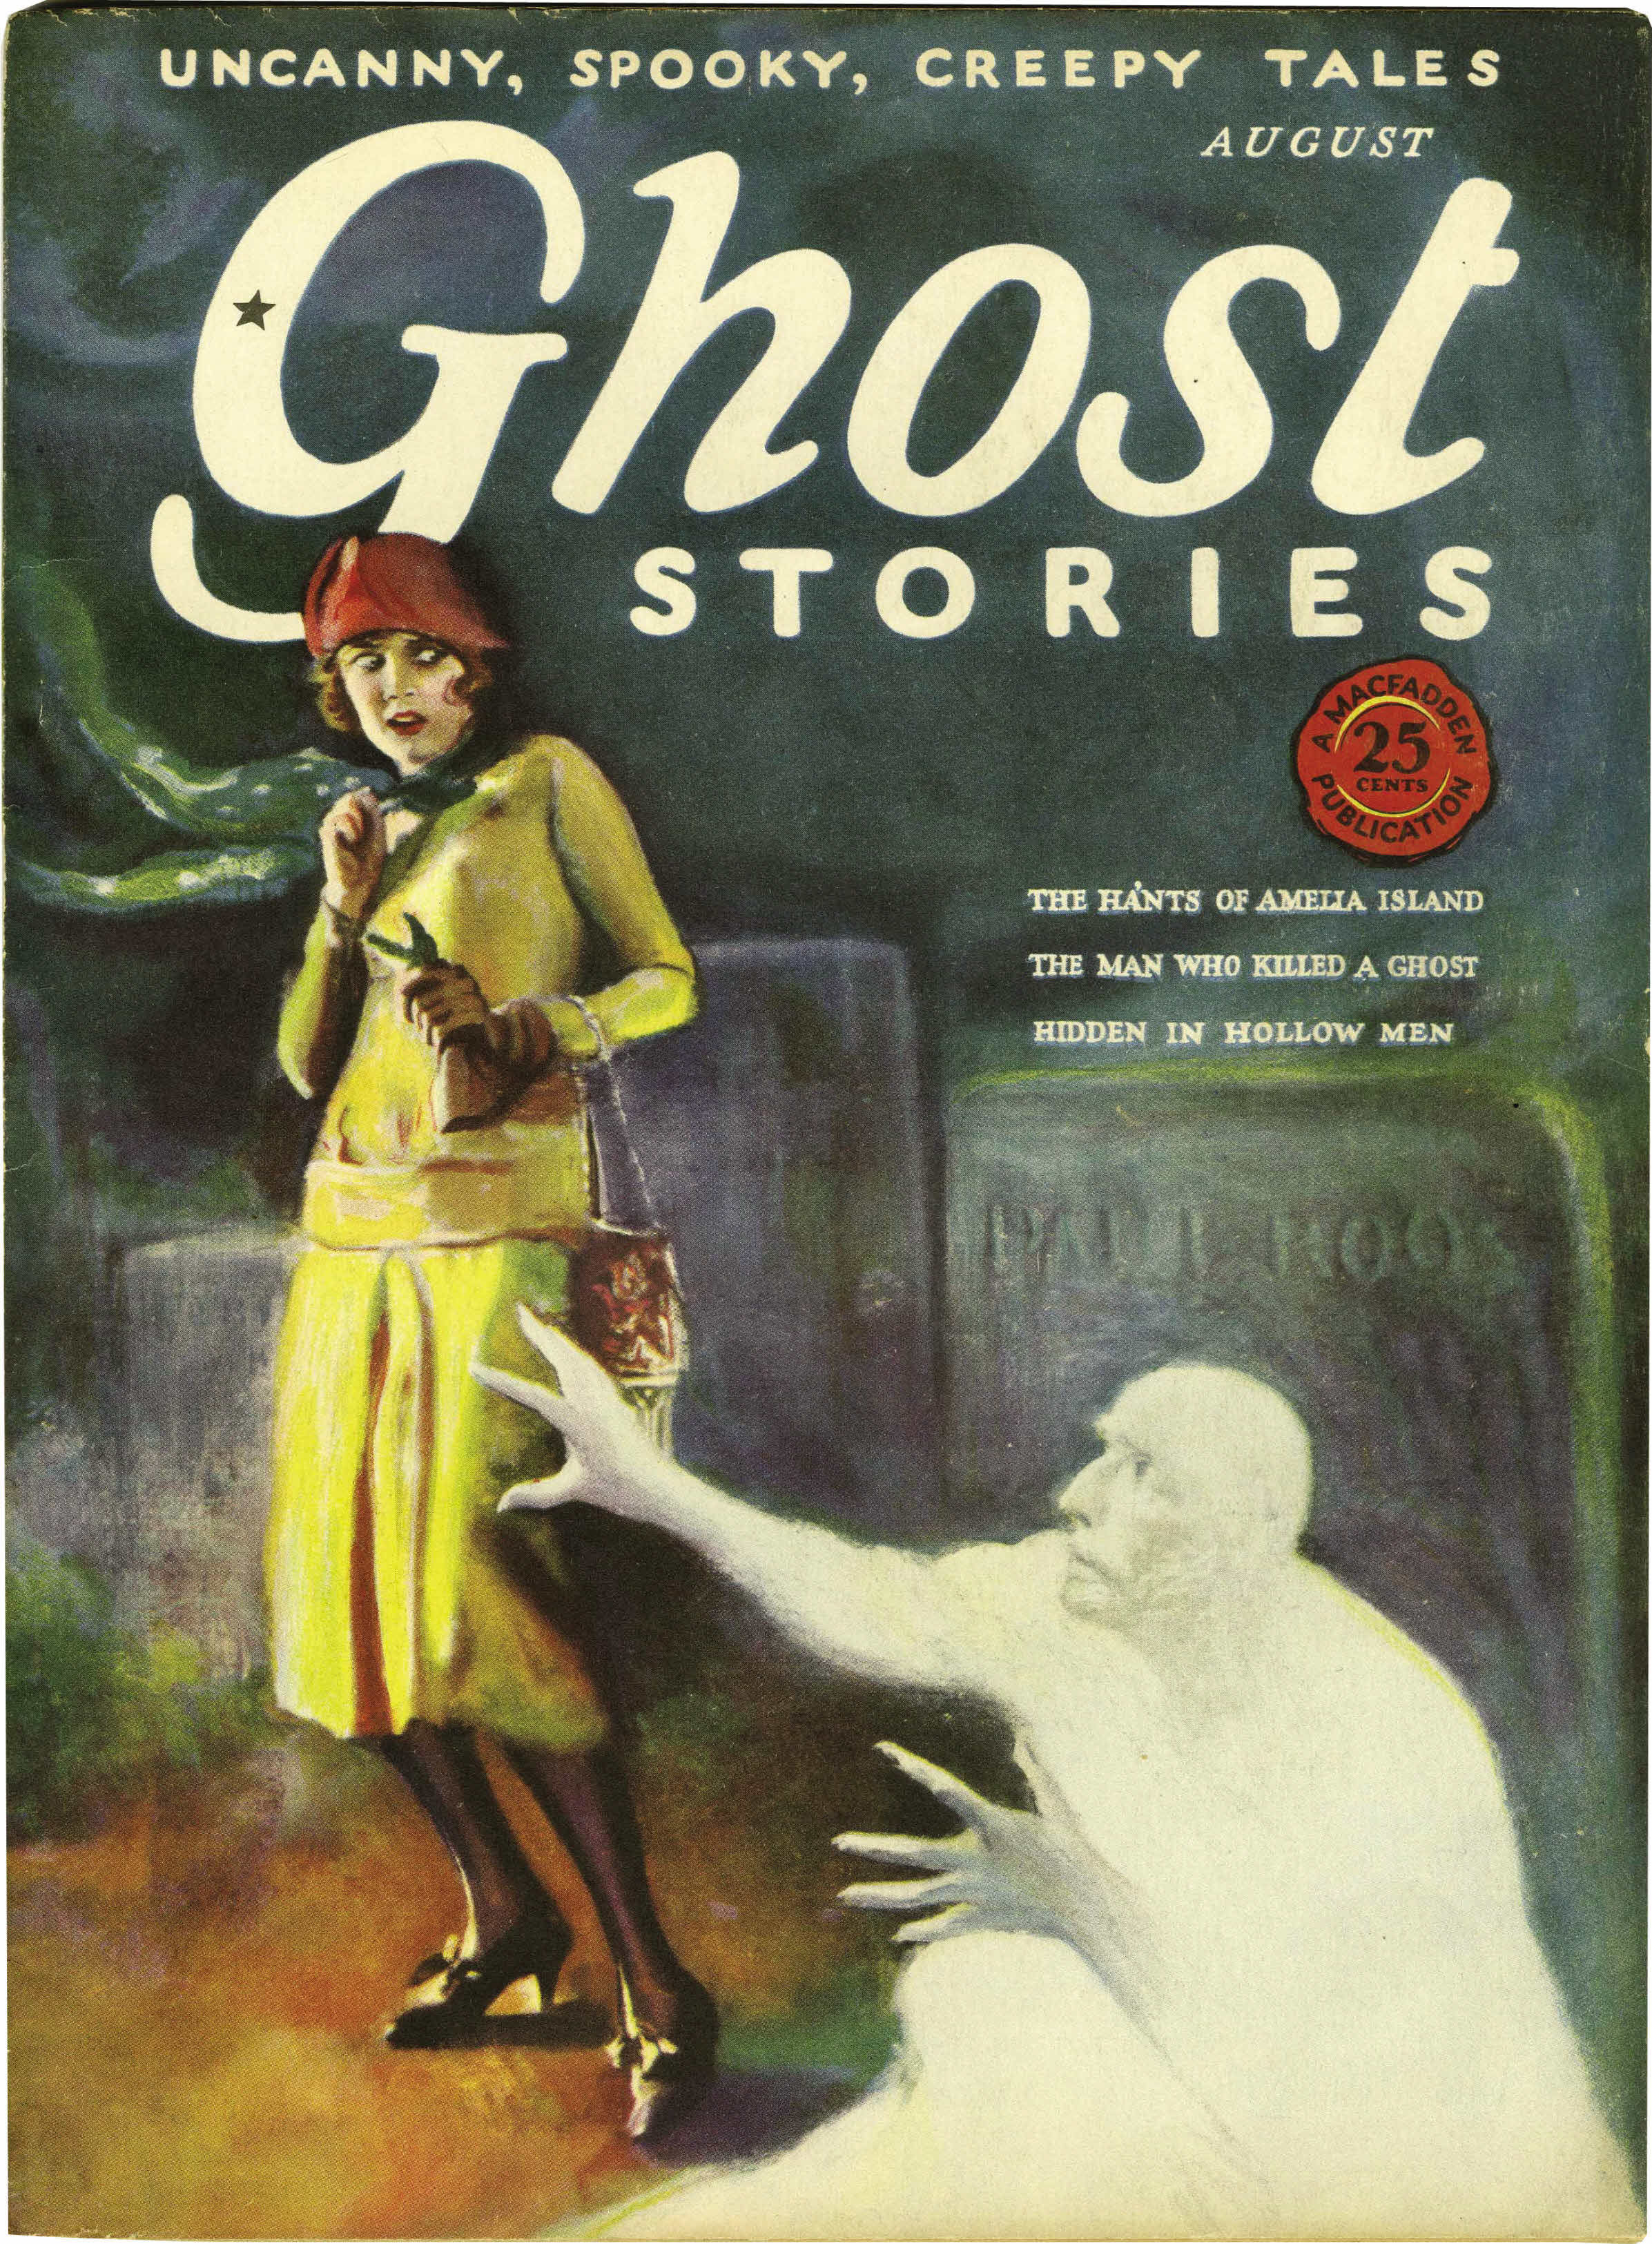 Wrote stories for magazines. Ghost журнал. Ghost stories (Magazine). Издания призраков. Ghost stories книга.